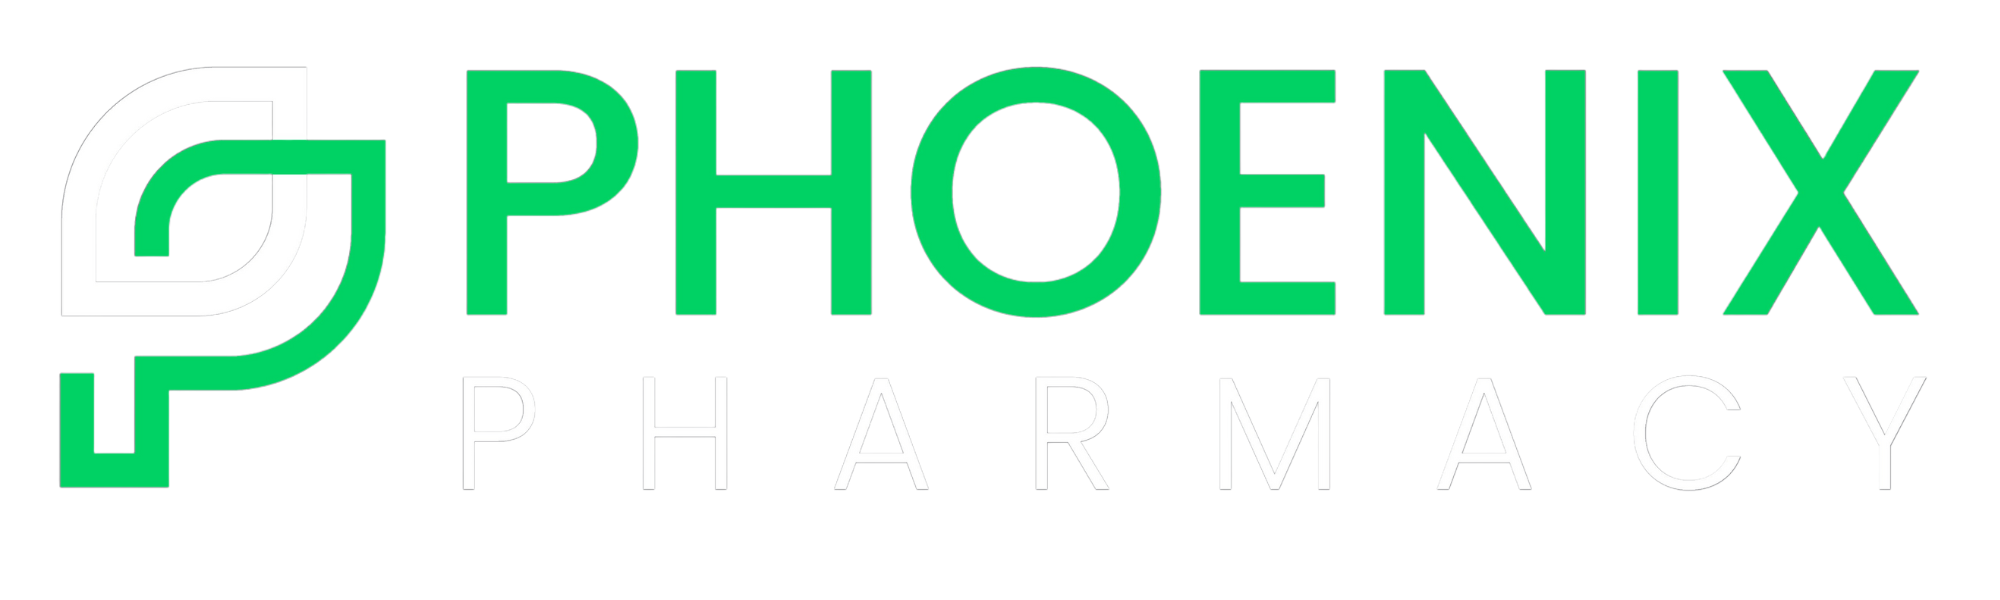 Phoenix Pharmacy logo